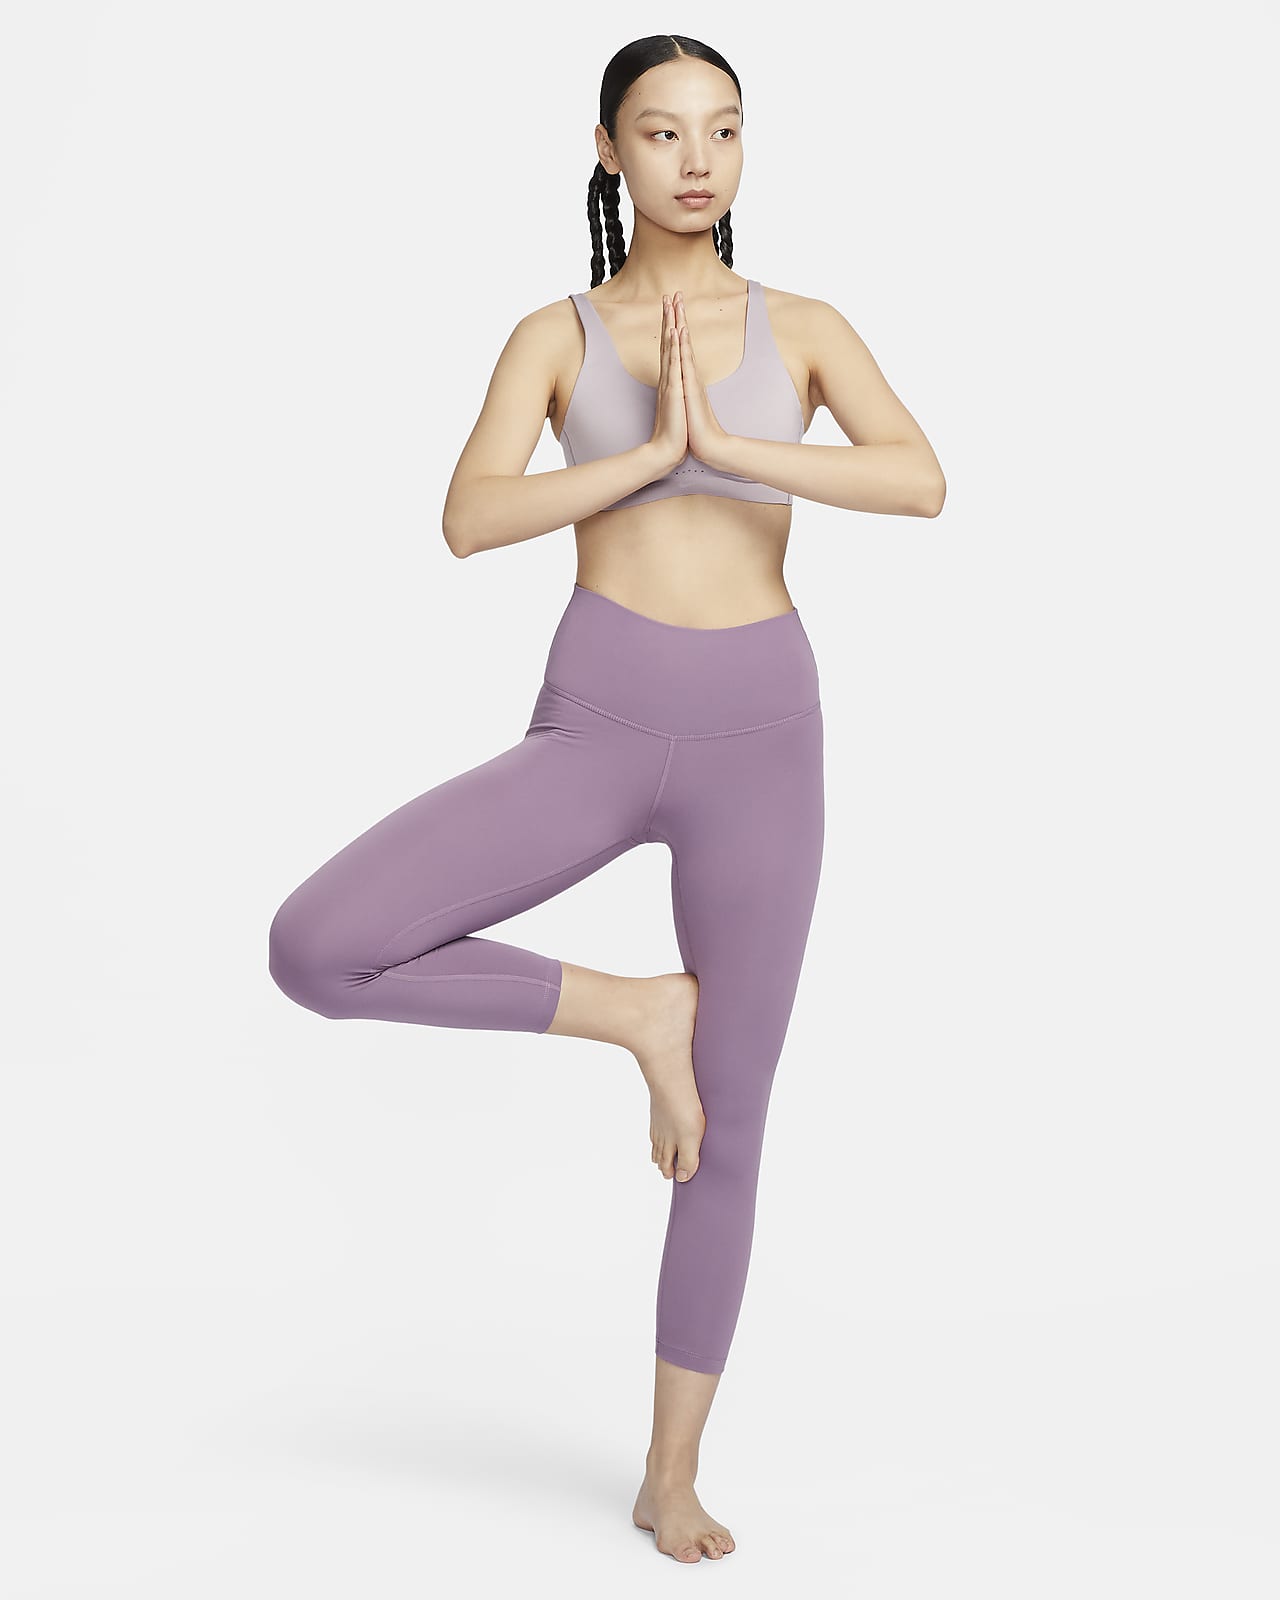 Nike Dri-FIT Women's Yoga High-Waisted 7/8 Leggings - Particle Grey